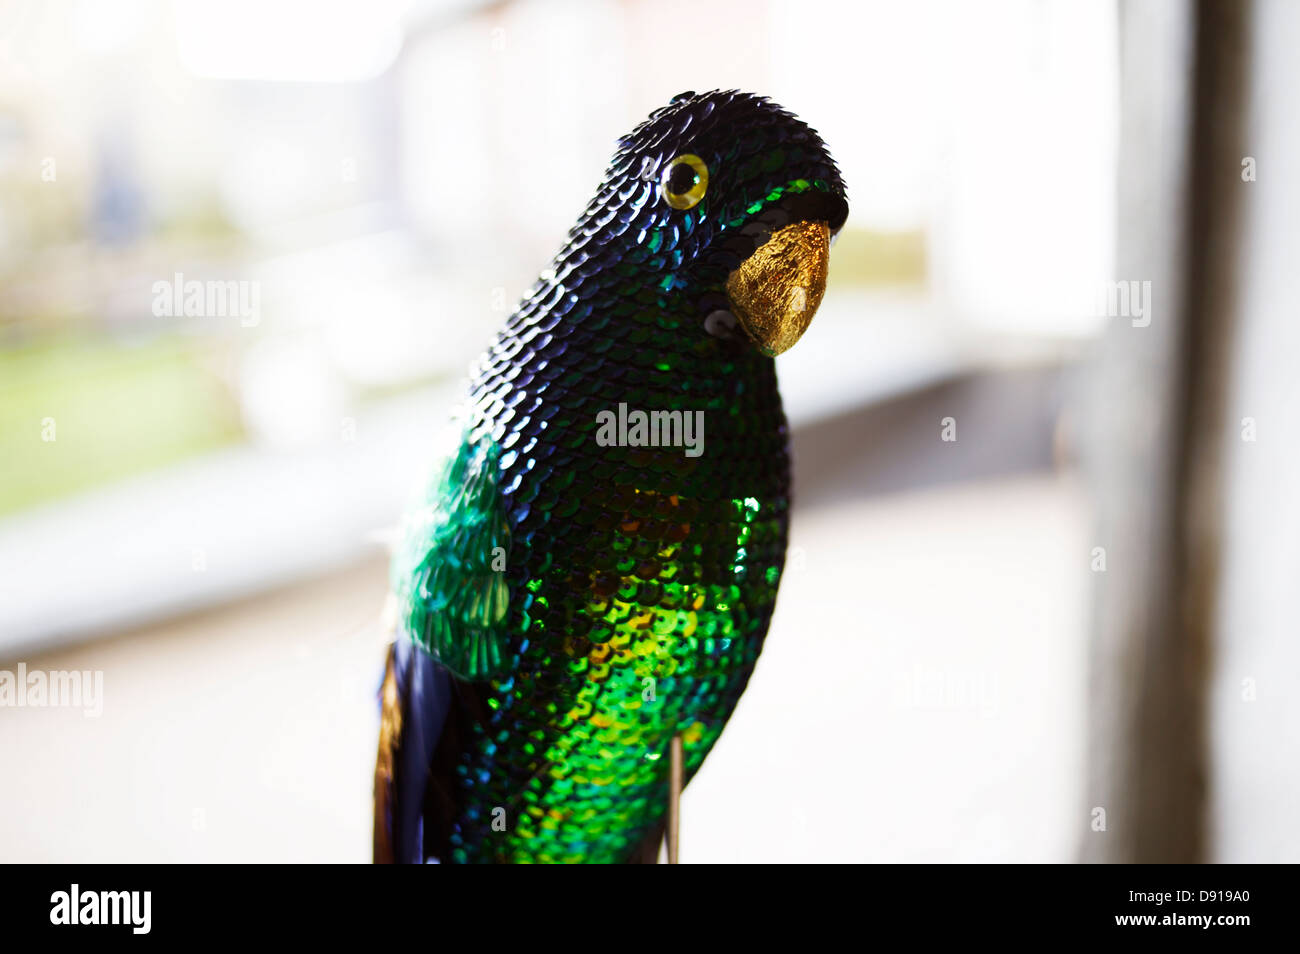 A spangle parrot, close-up. Stock Photo